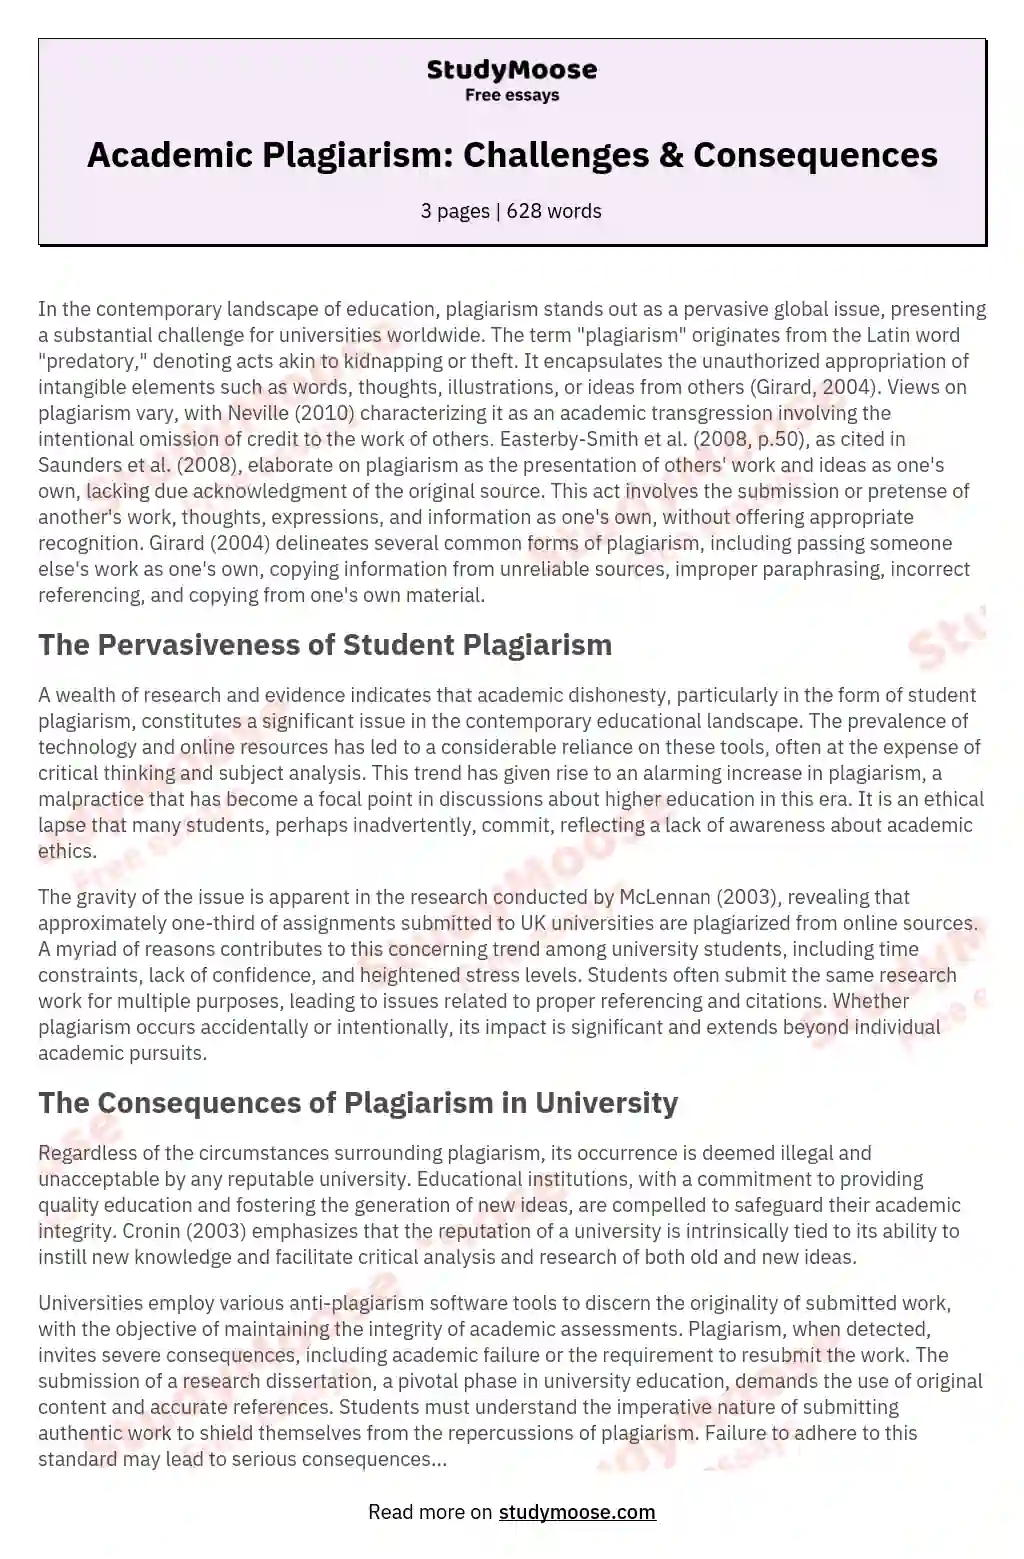 The Problem of Plagiarism